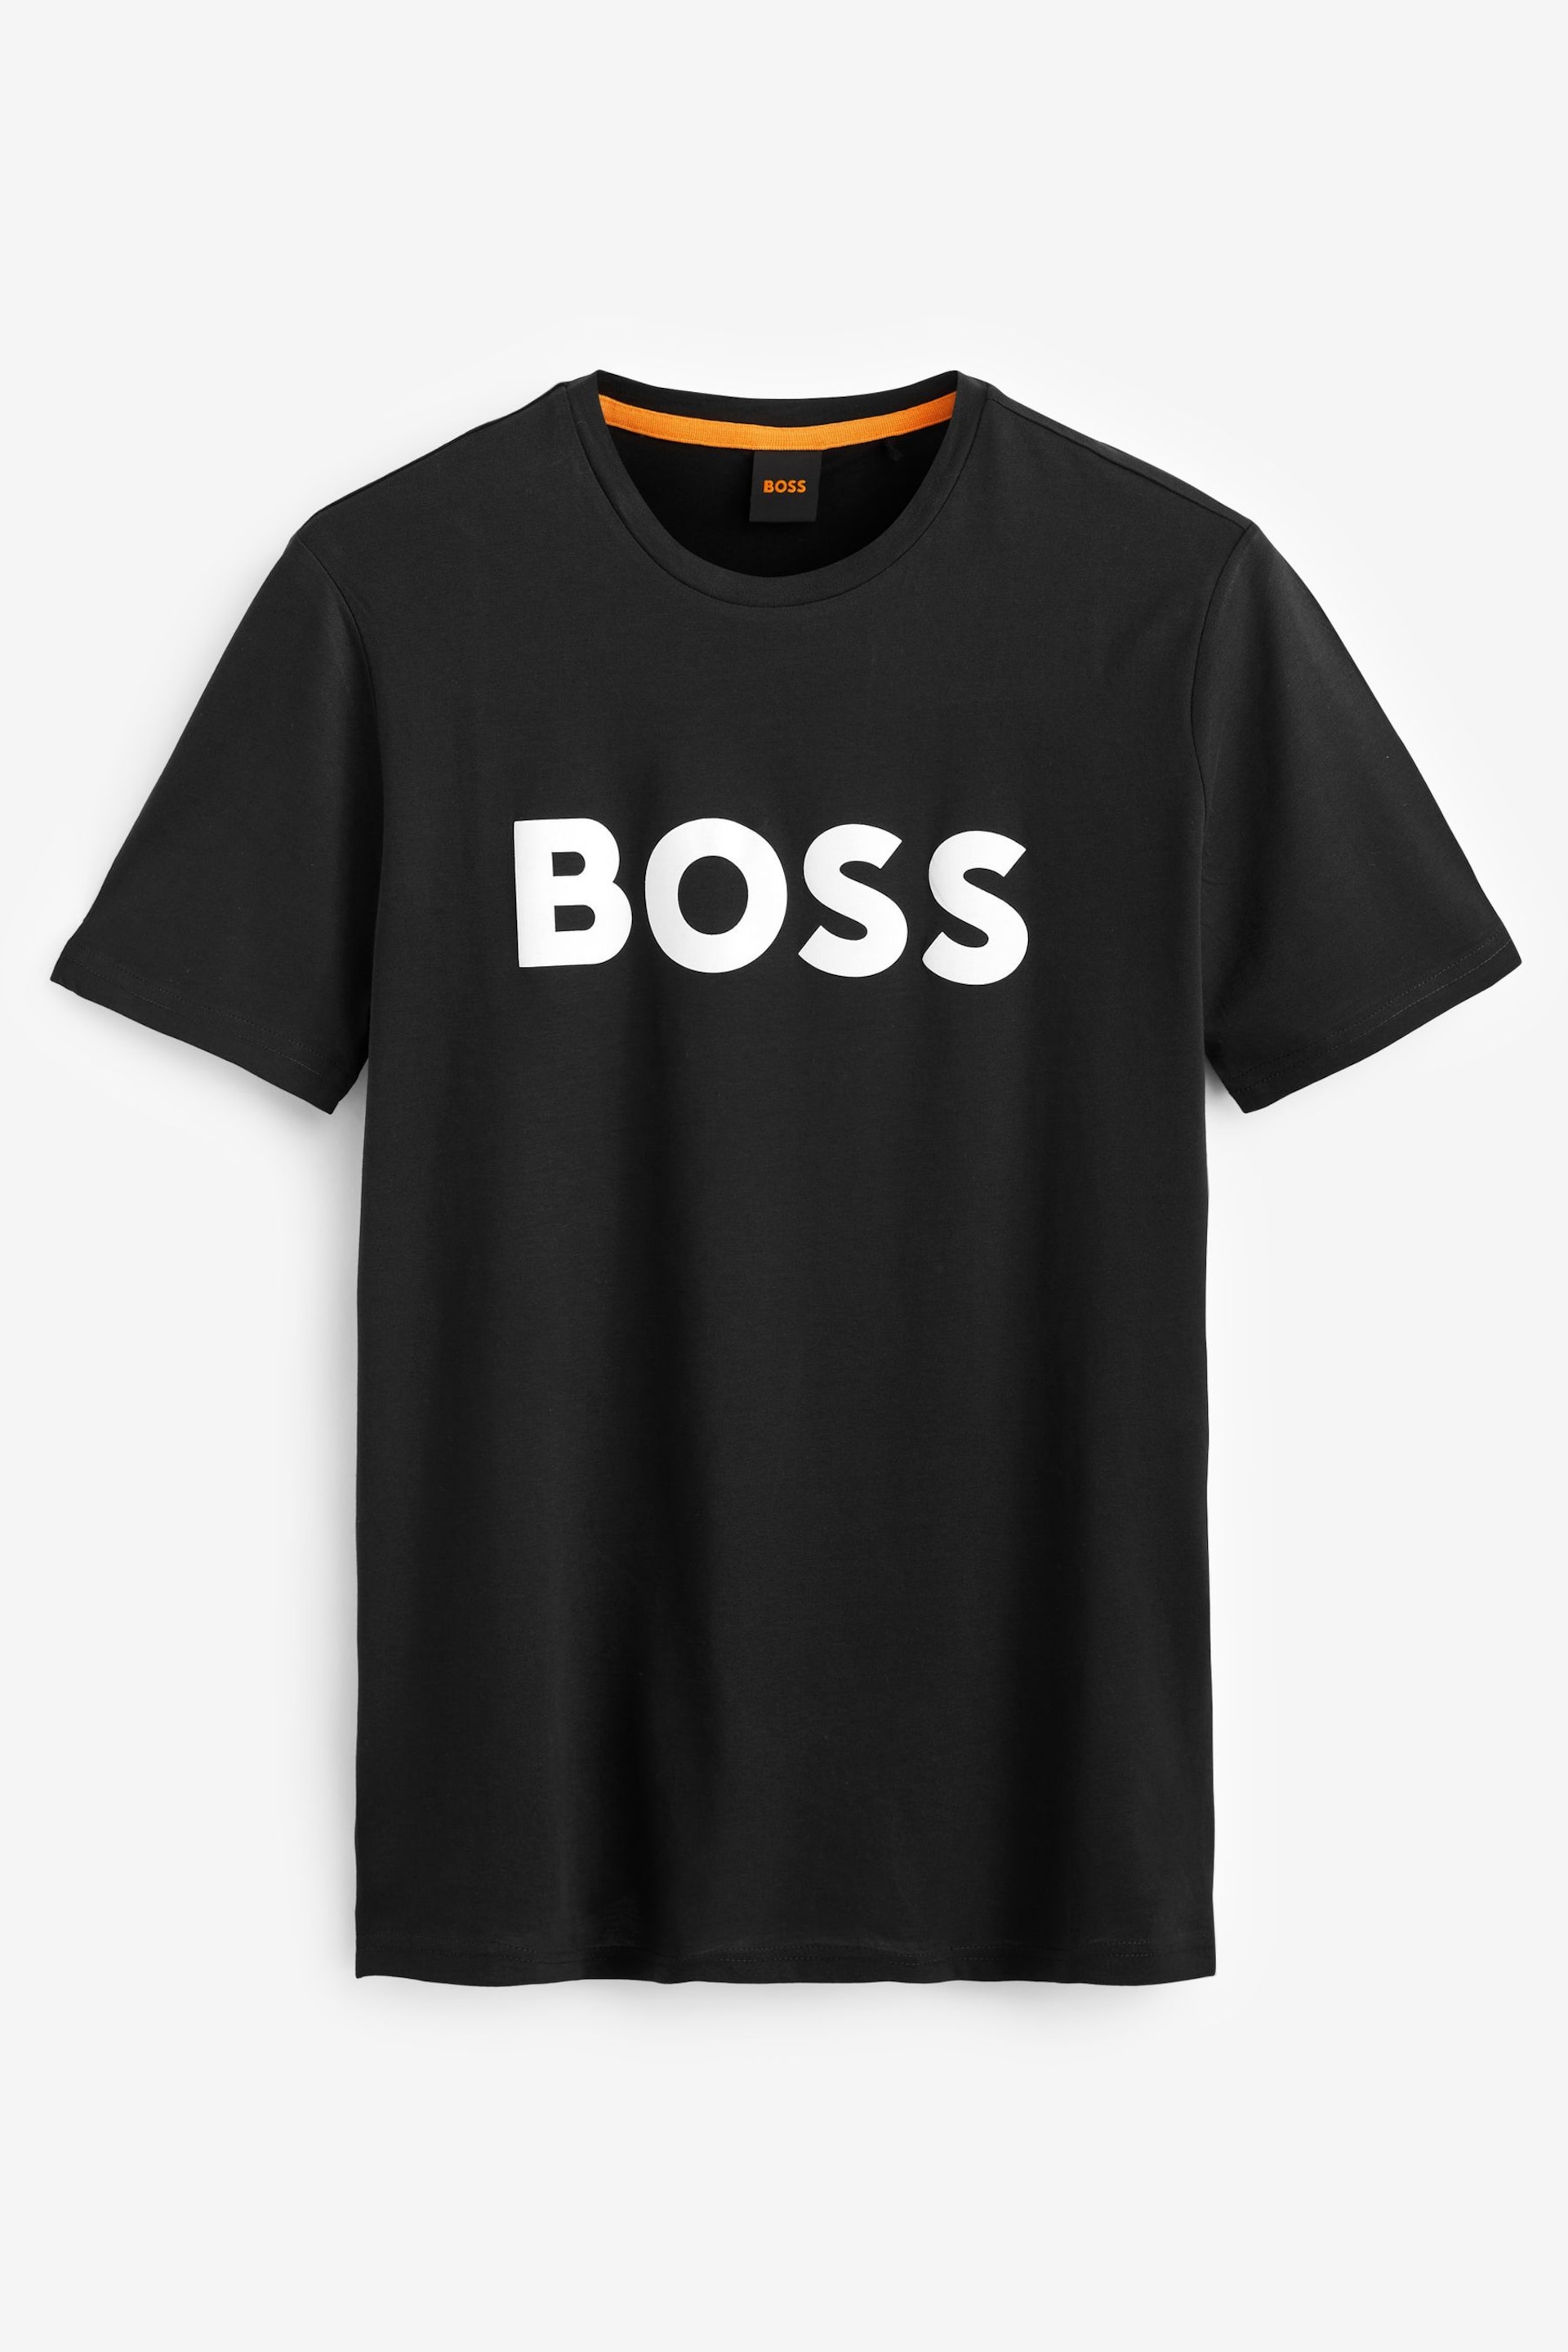 BOSS Black/White Logo Large Chest Logo T-Shirt - Image 5 of 6